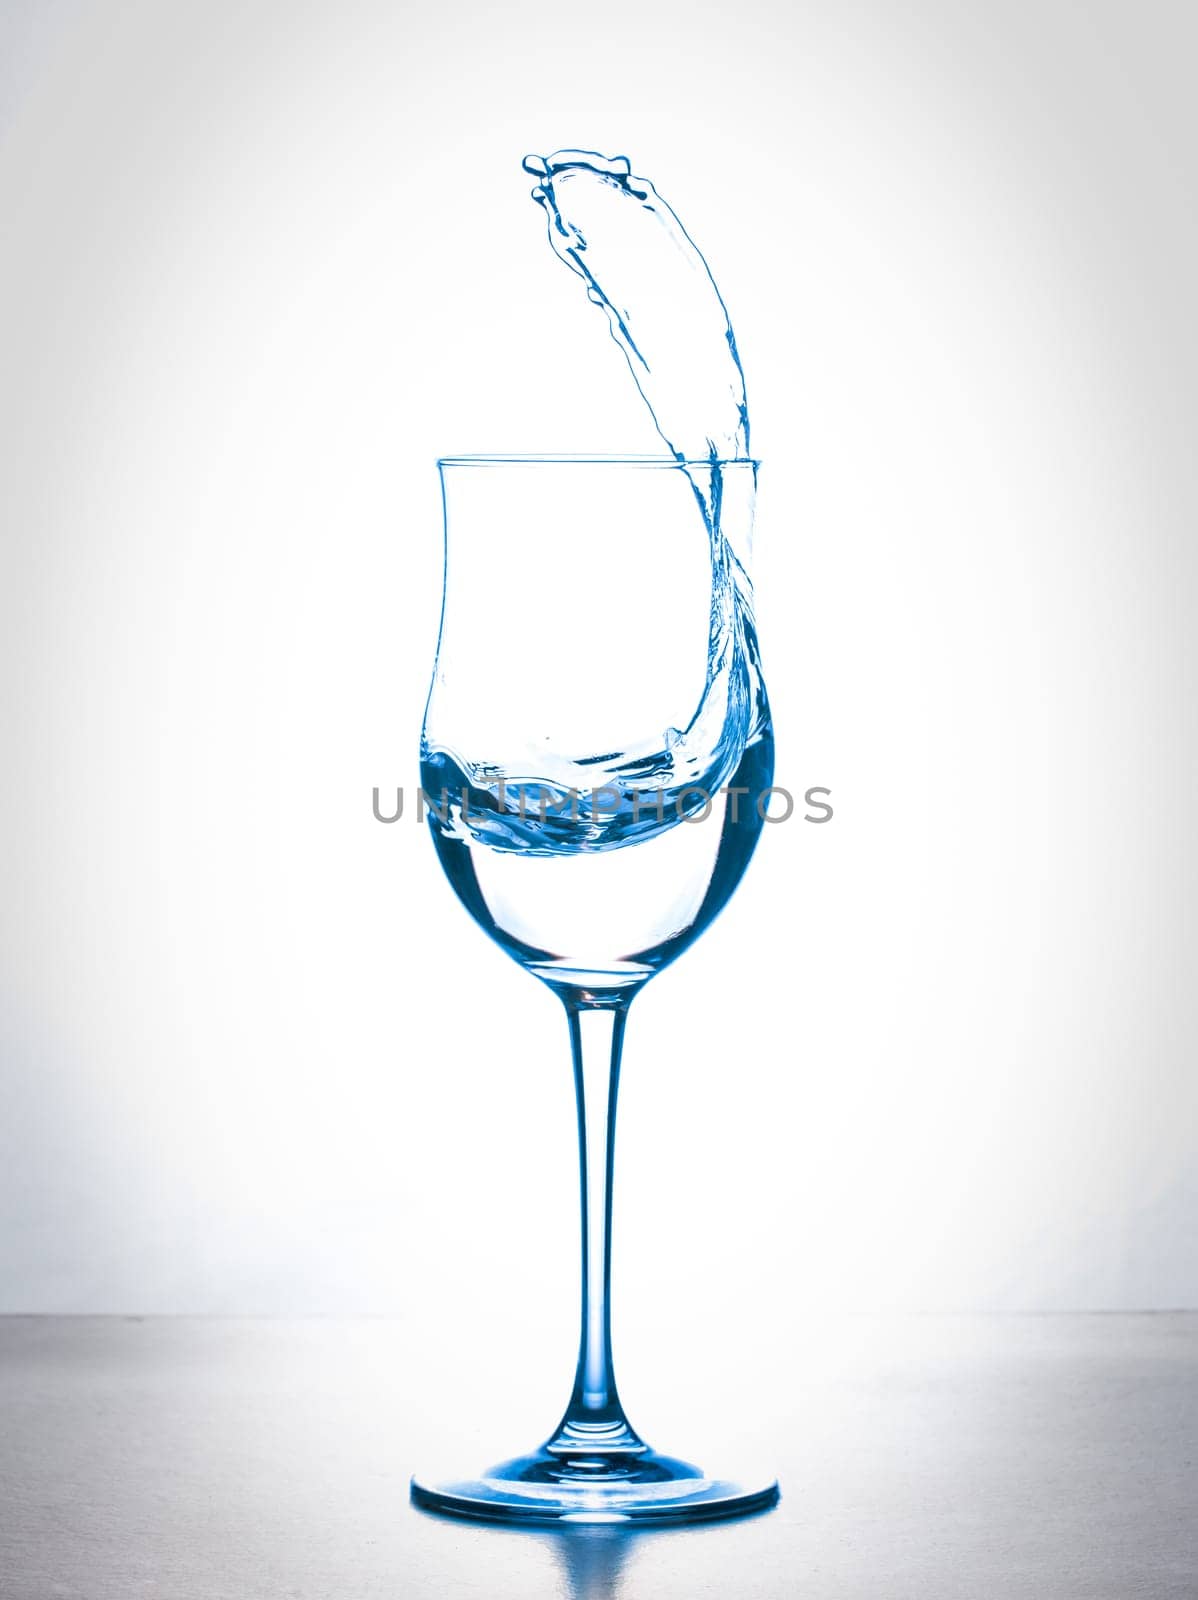 water splashing from wineglass on white background